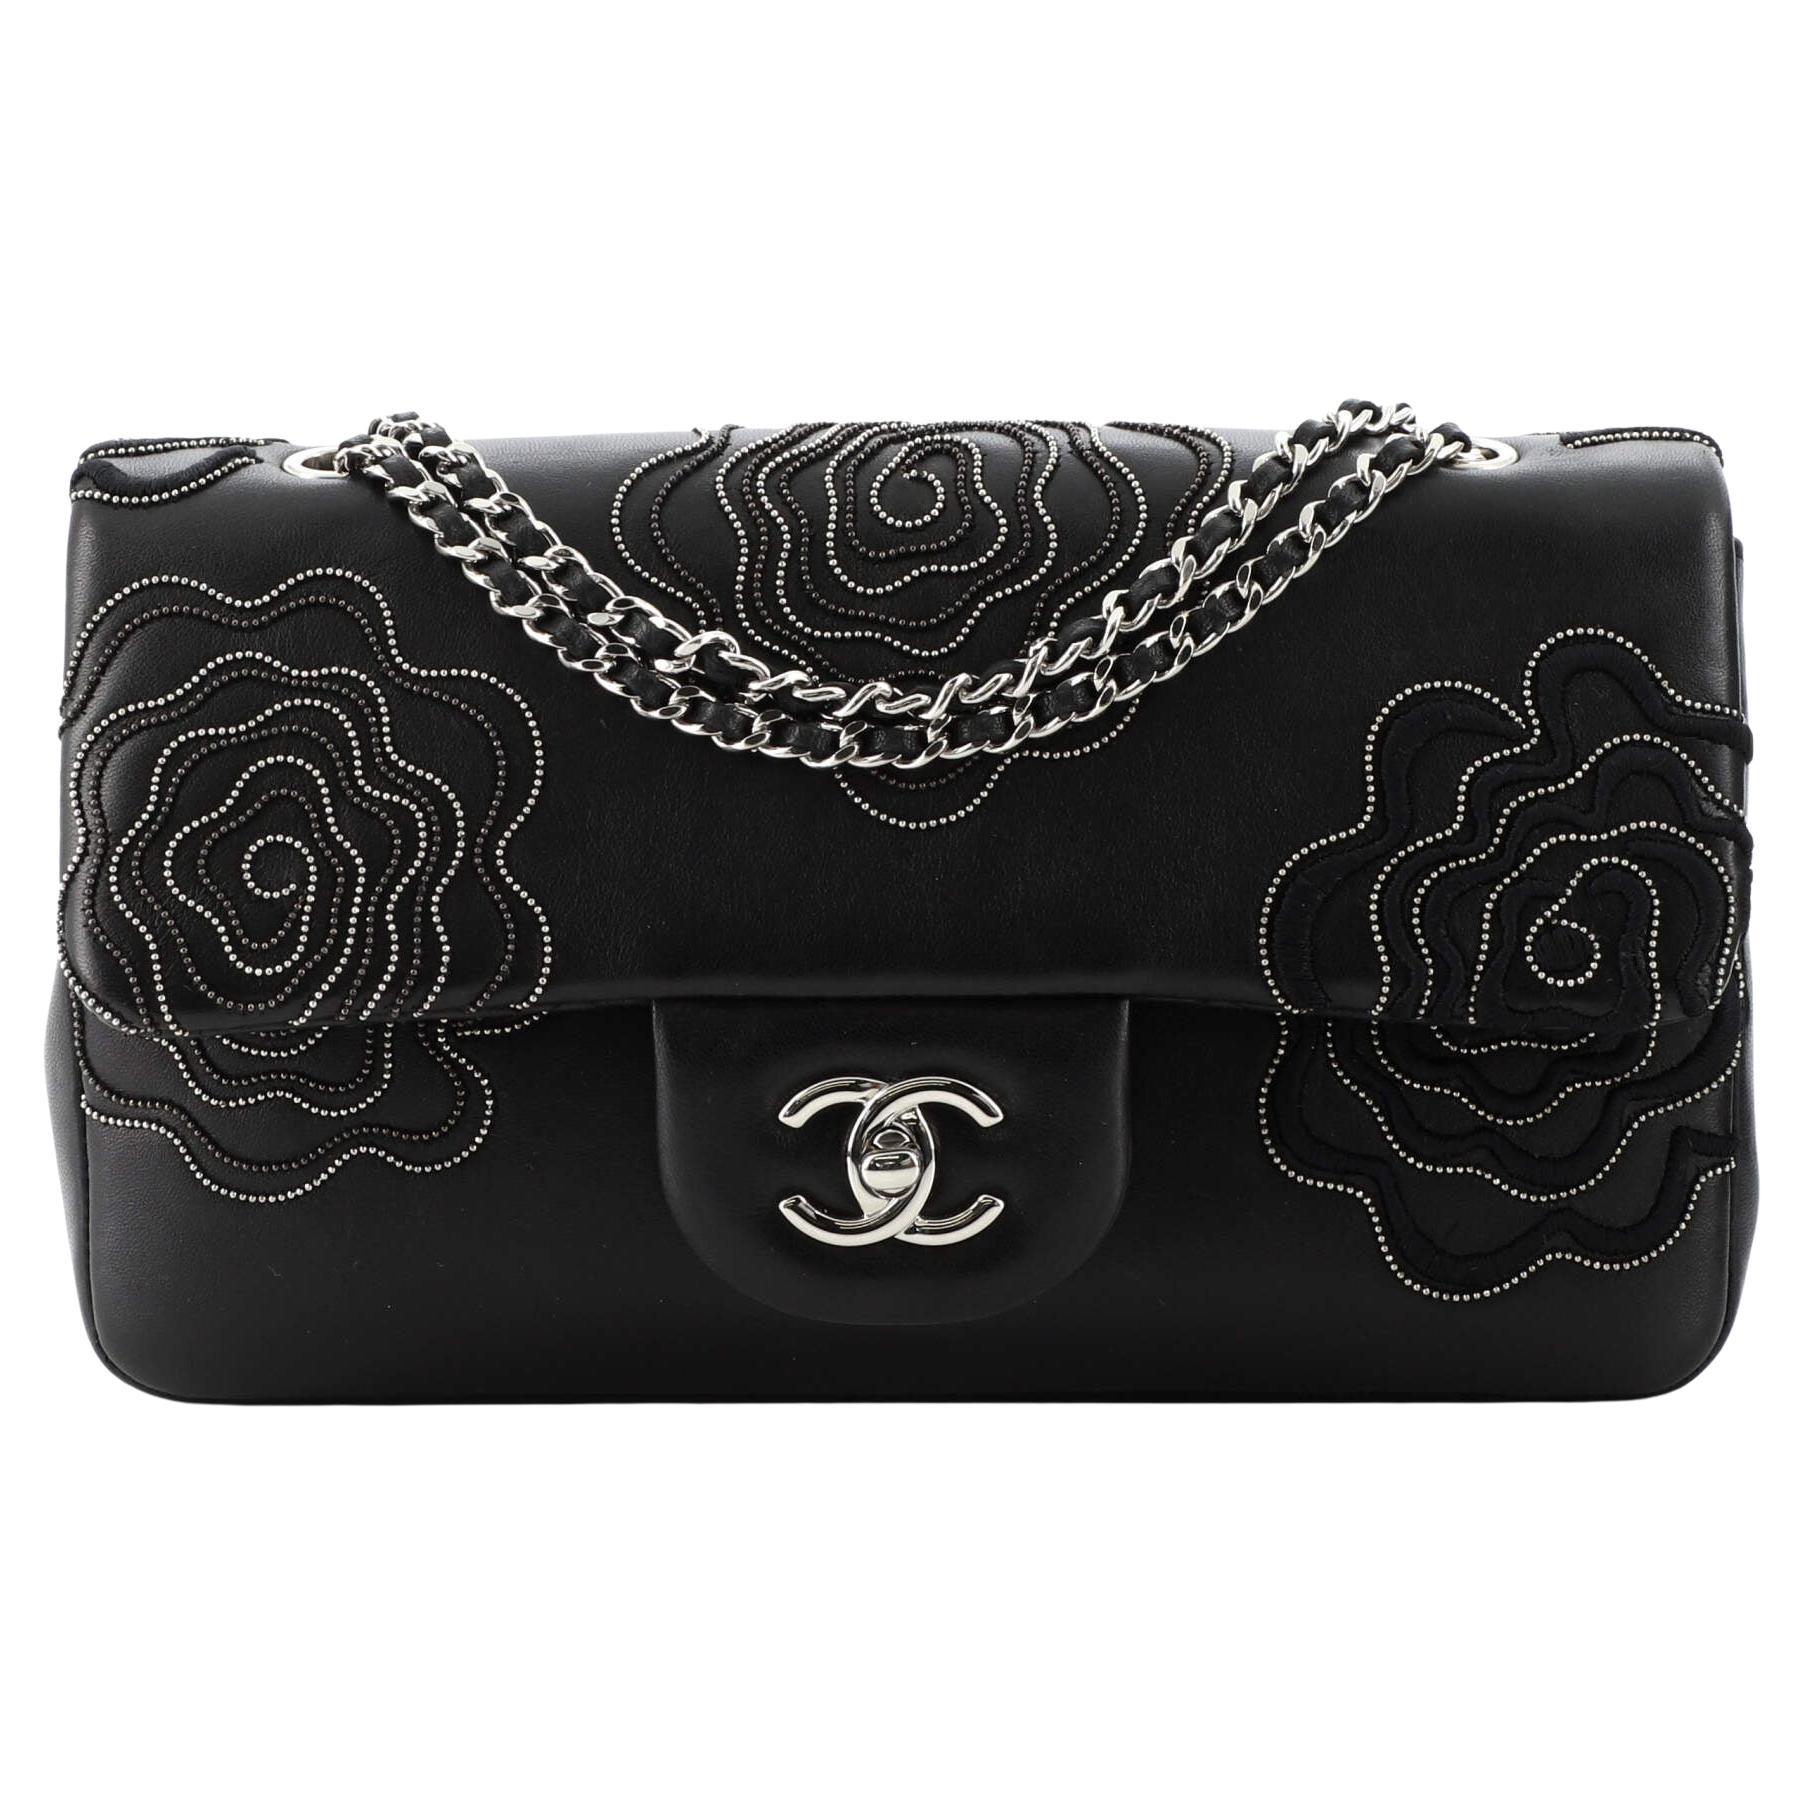 Chanel Camellia Follies Flap Bag Embroidered Lambskin Medium